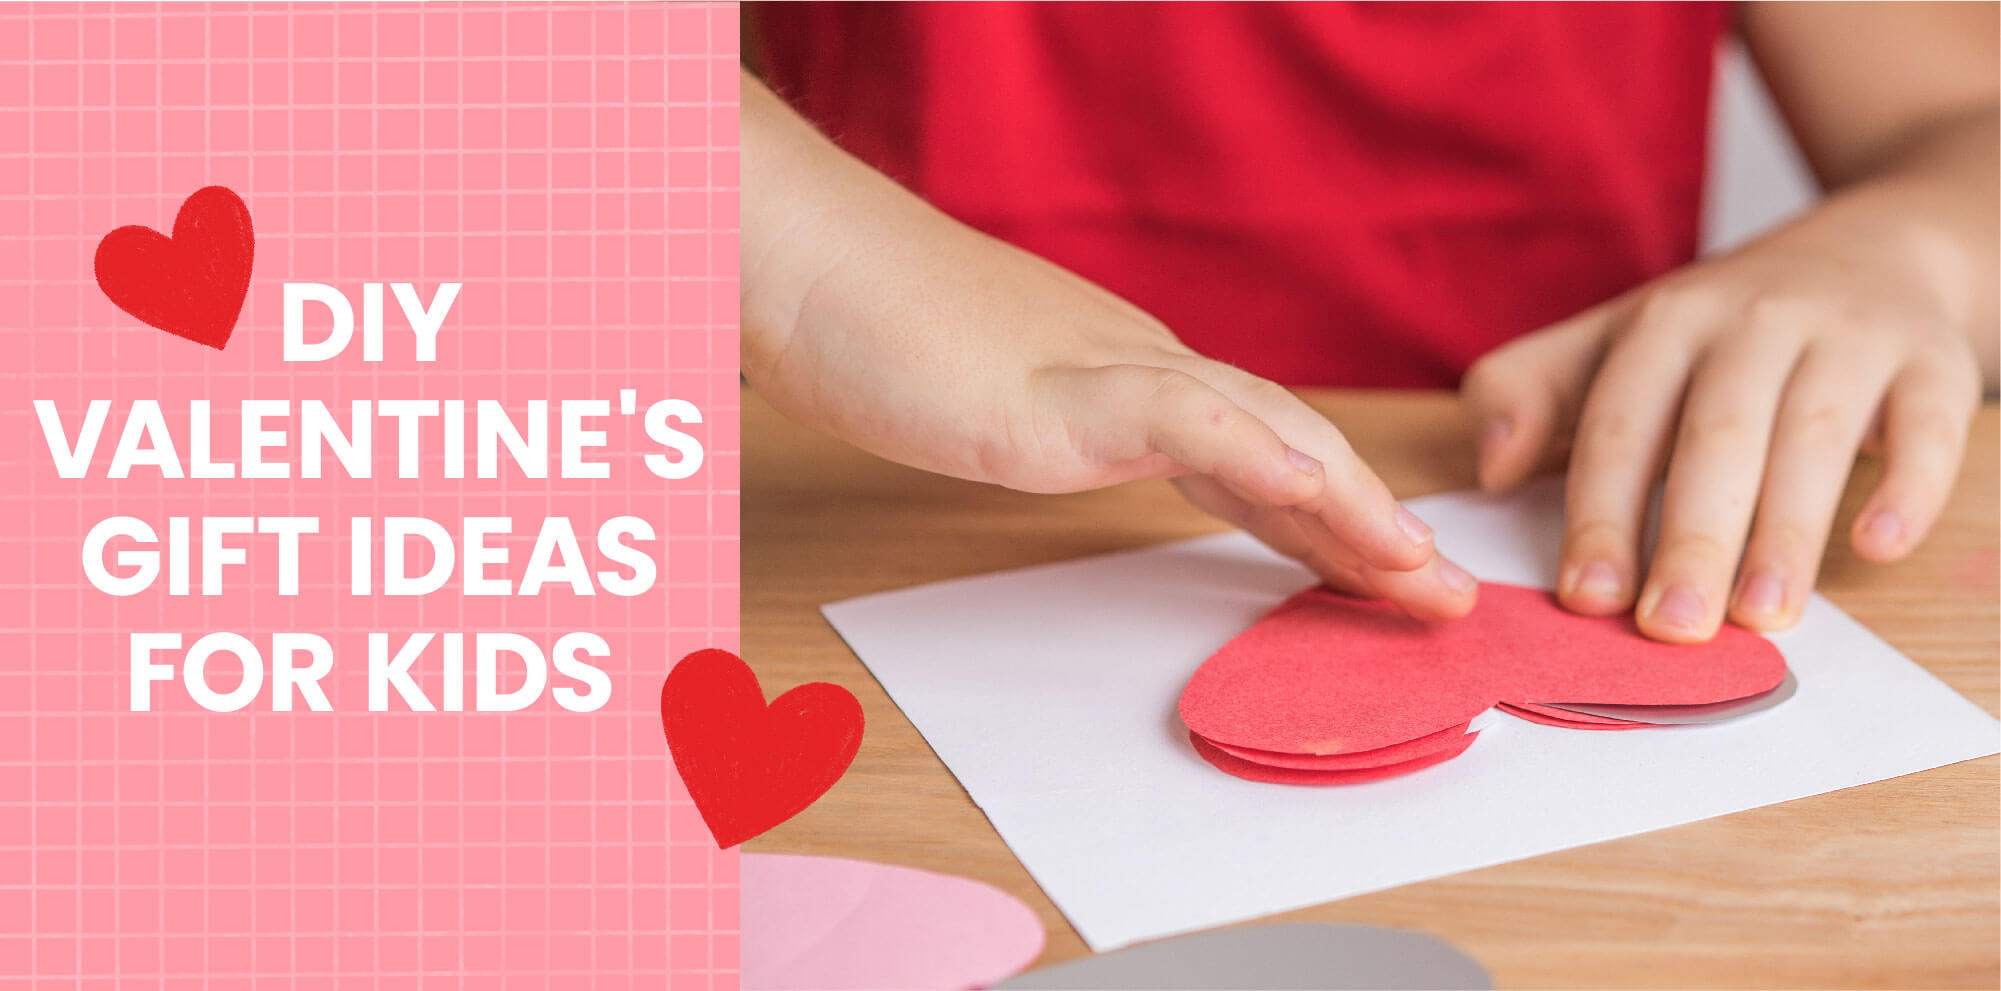 DIY Valentine's Gift Ideas for Kids to Create - Little Passports